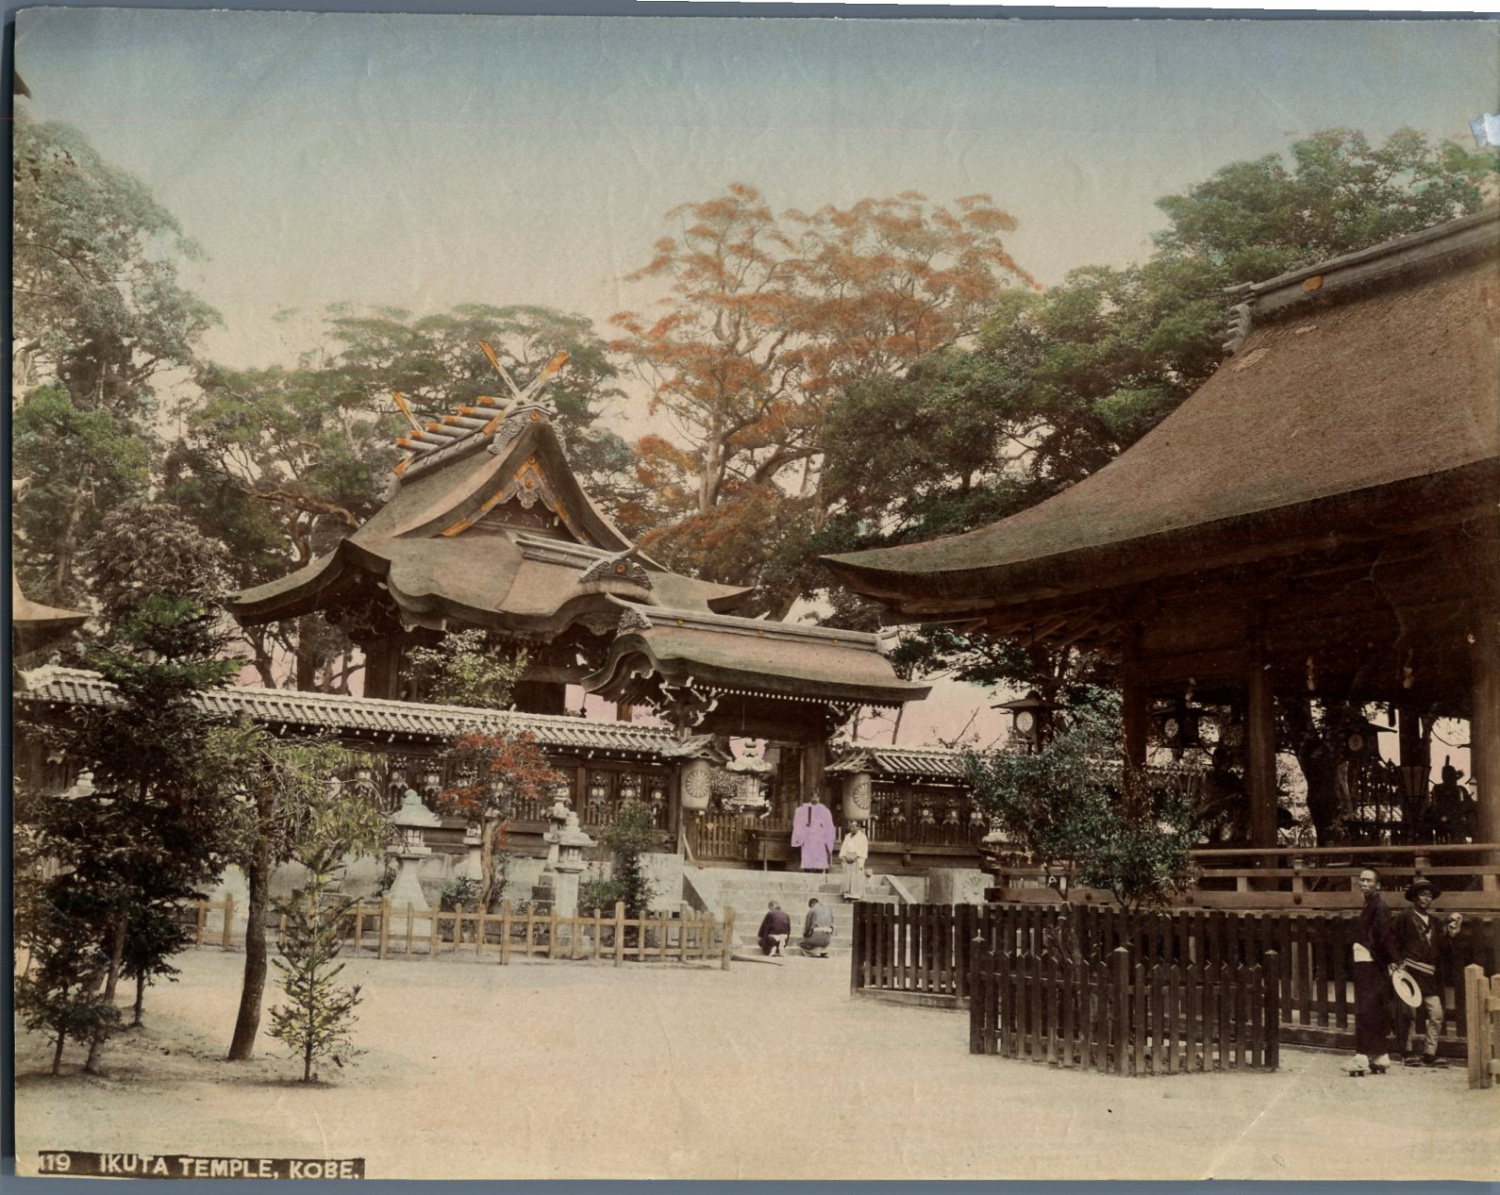 Japon, Ikuta Temple, Kobe by Photographie originale / Original ...